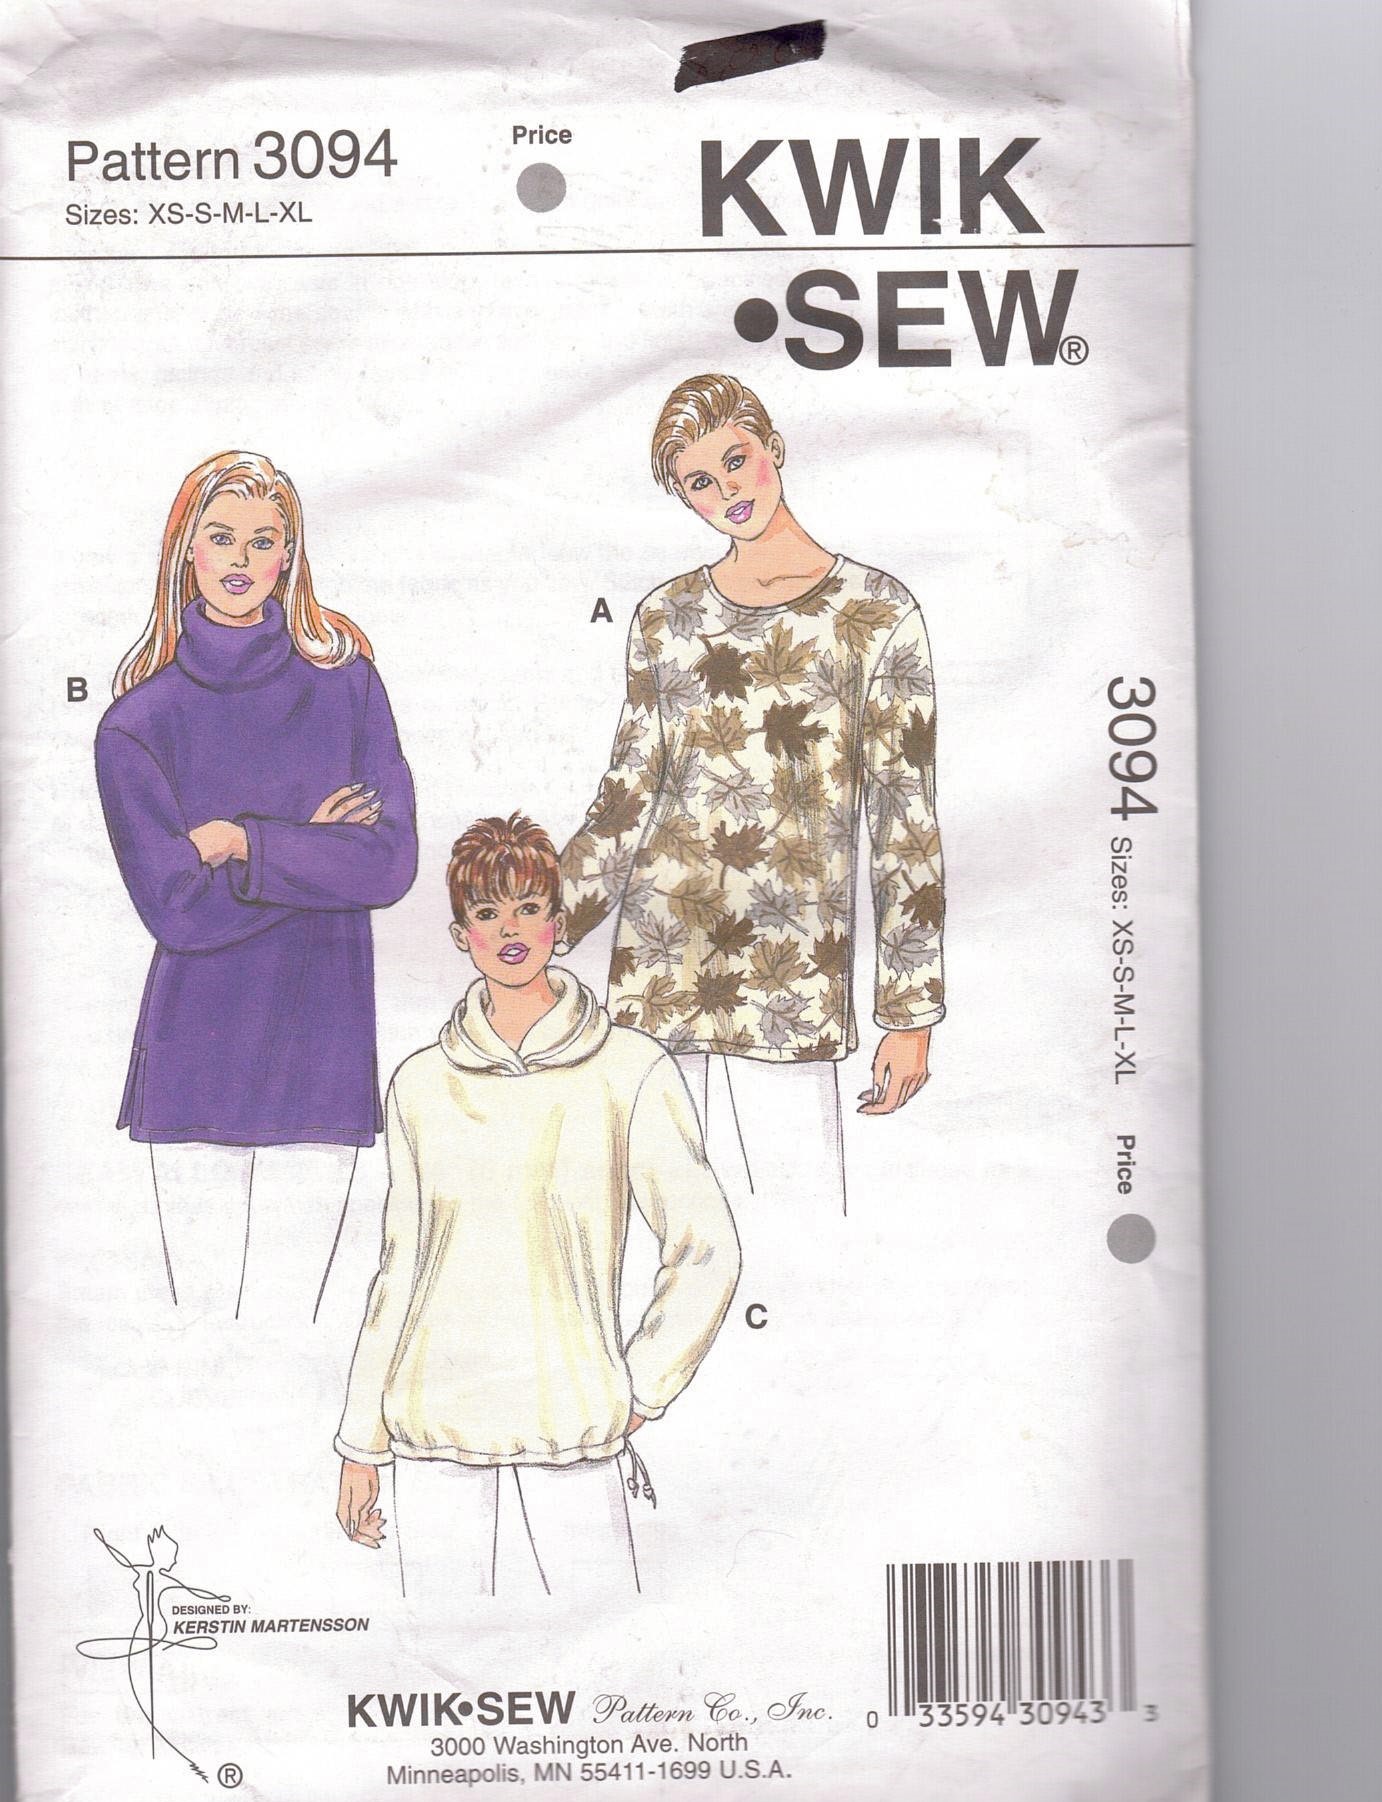 Kwik Sew 2001, Vintage Sewing Patterns